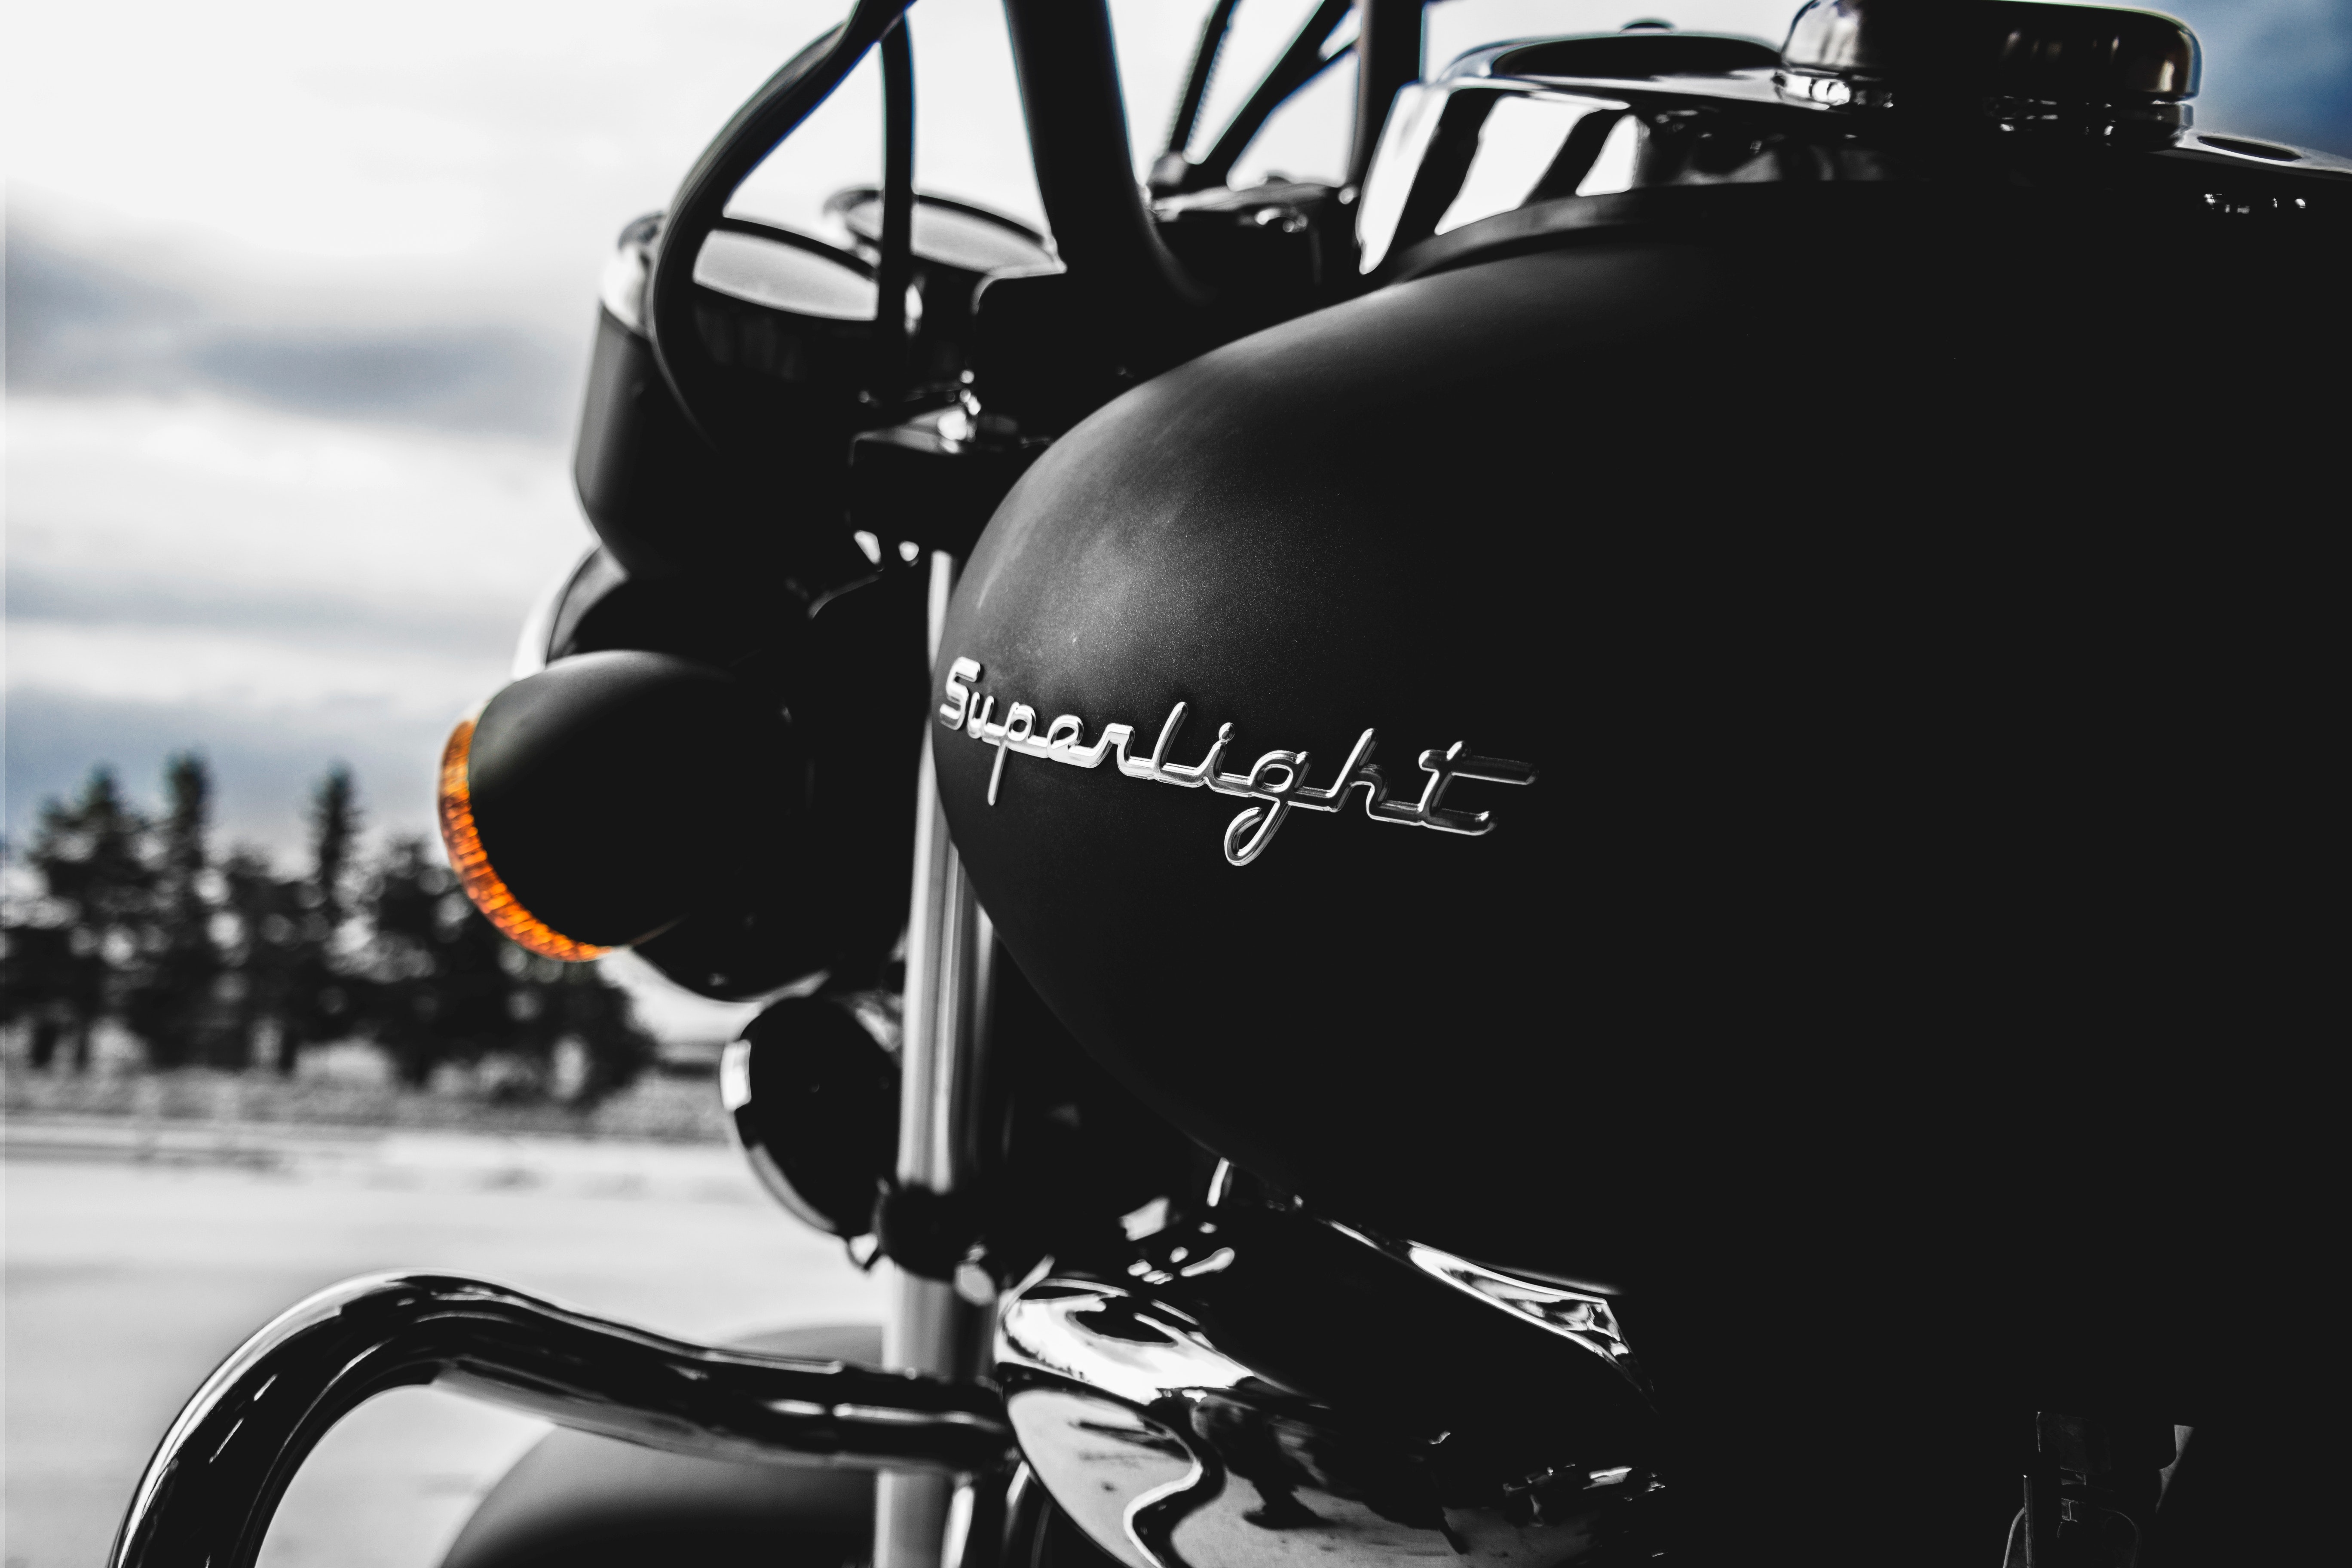 Superlight motorcycle photo